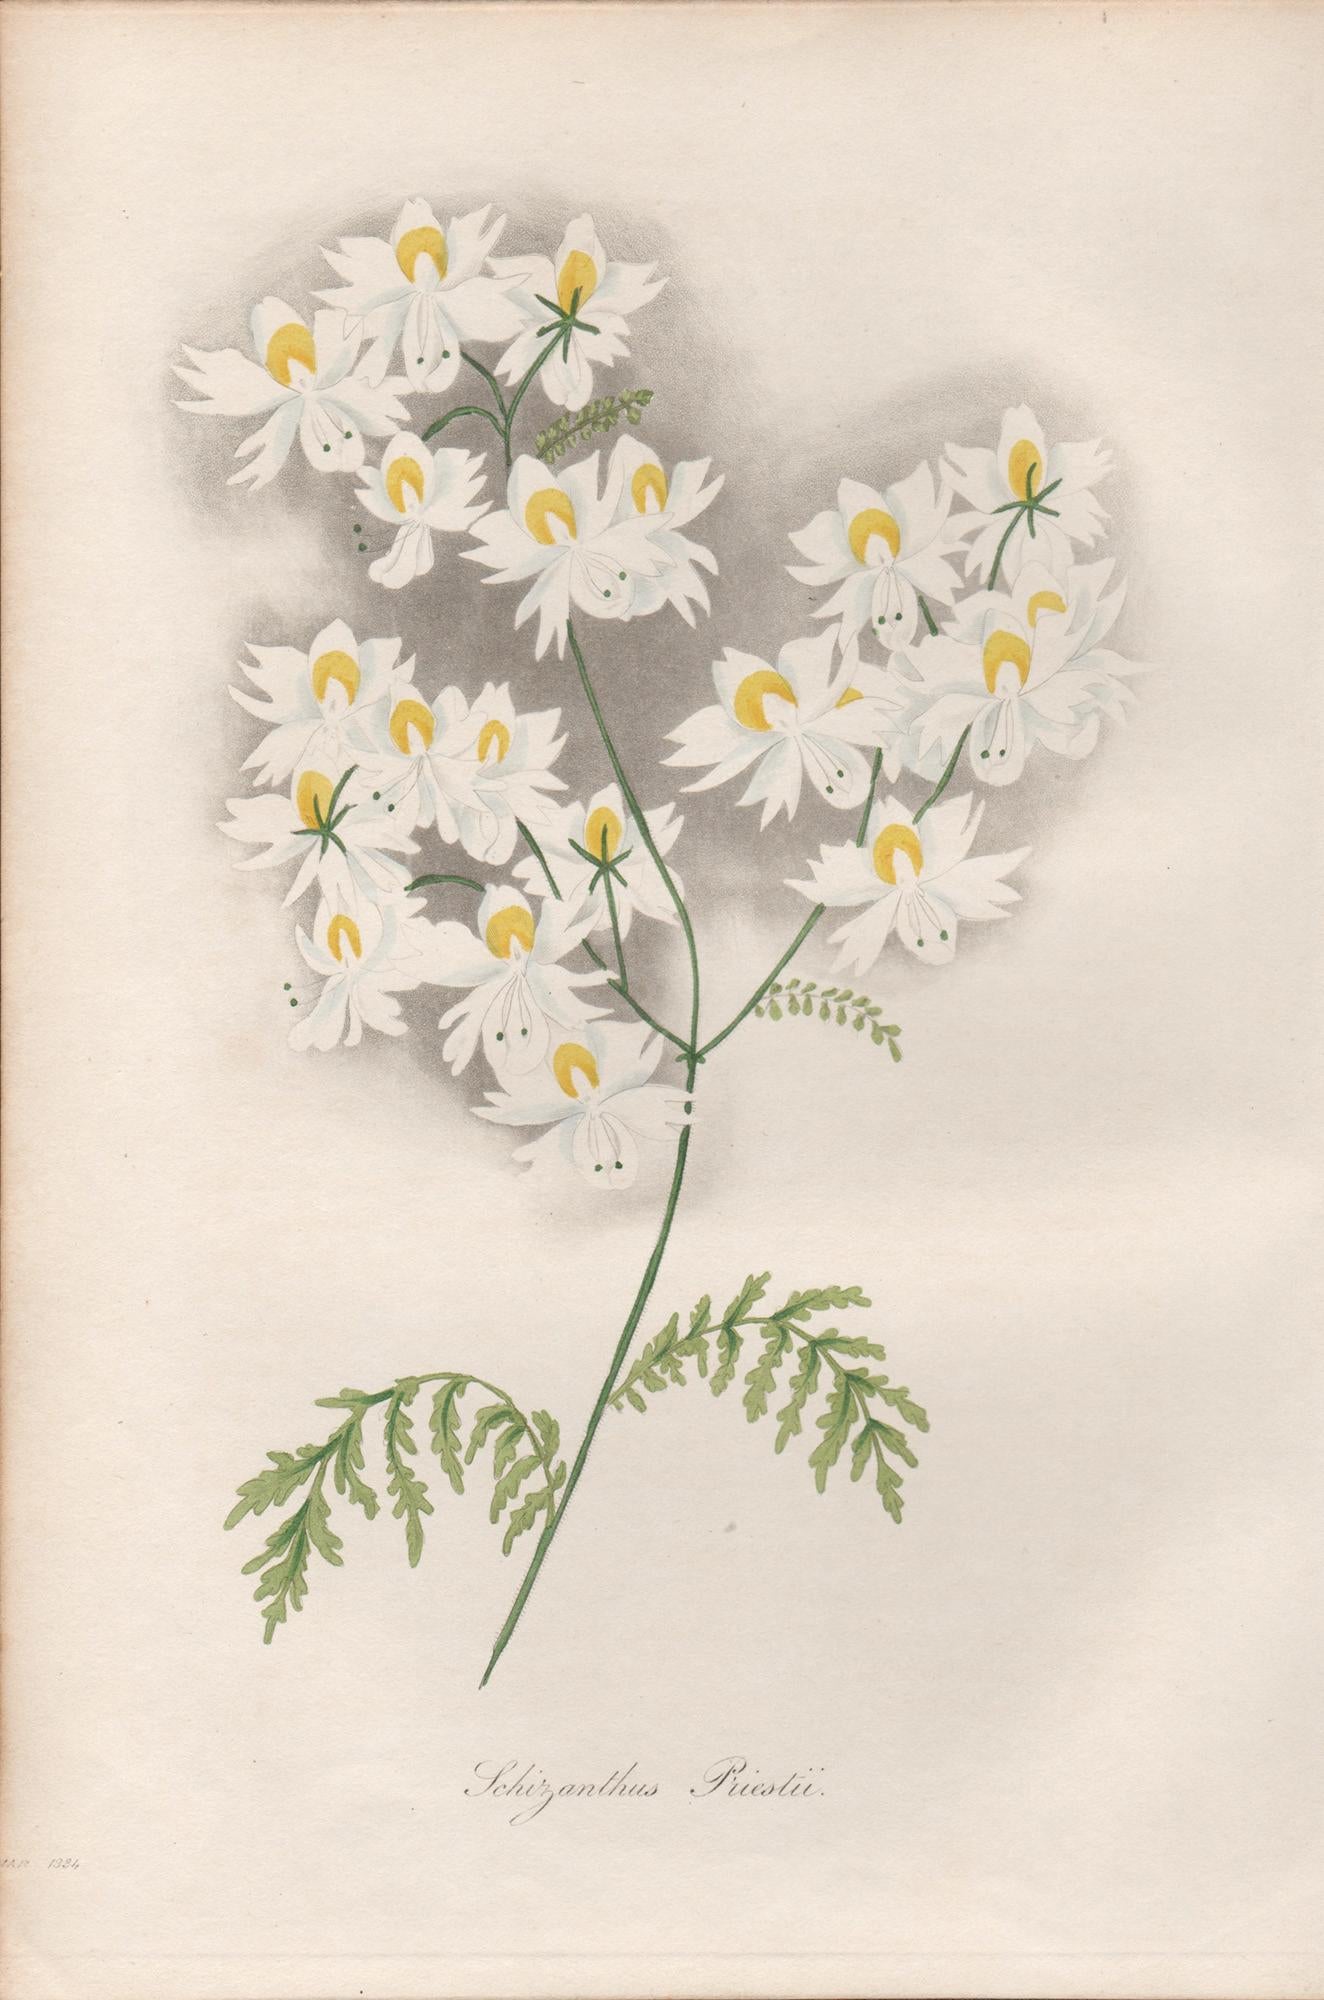 Schizanthus Priestii, antique botanical white flower engraving